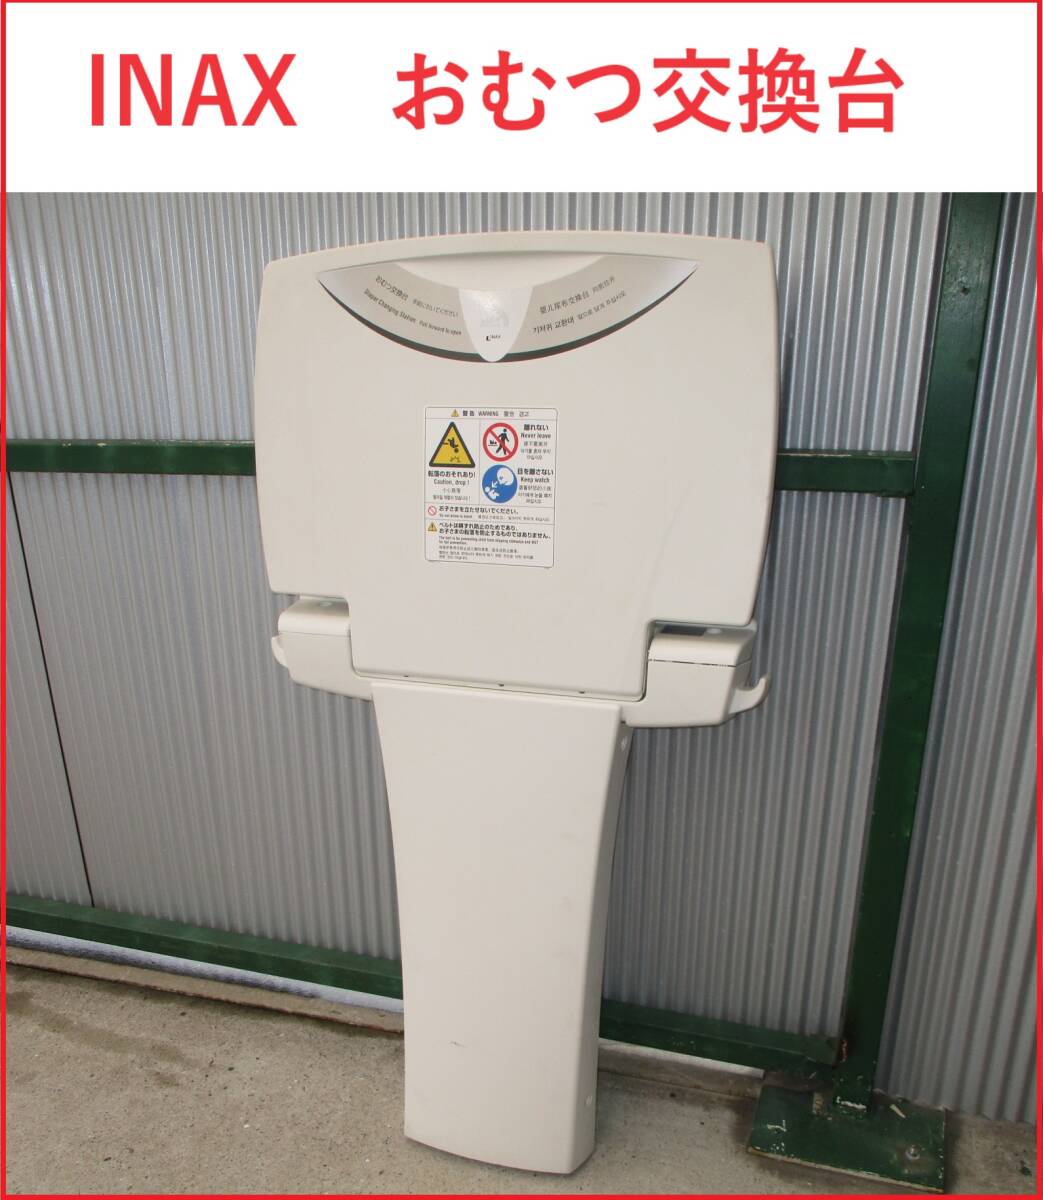 INAX diapers exchange pcs baby seat secondhand goods S